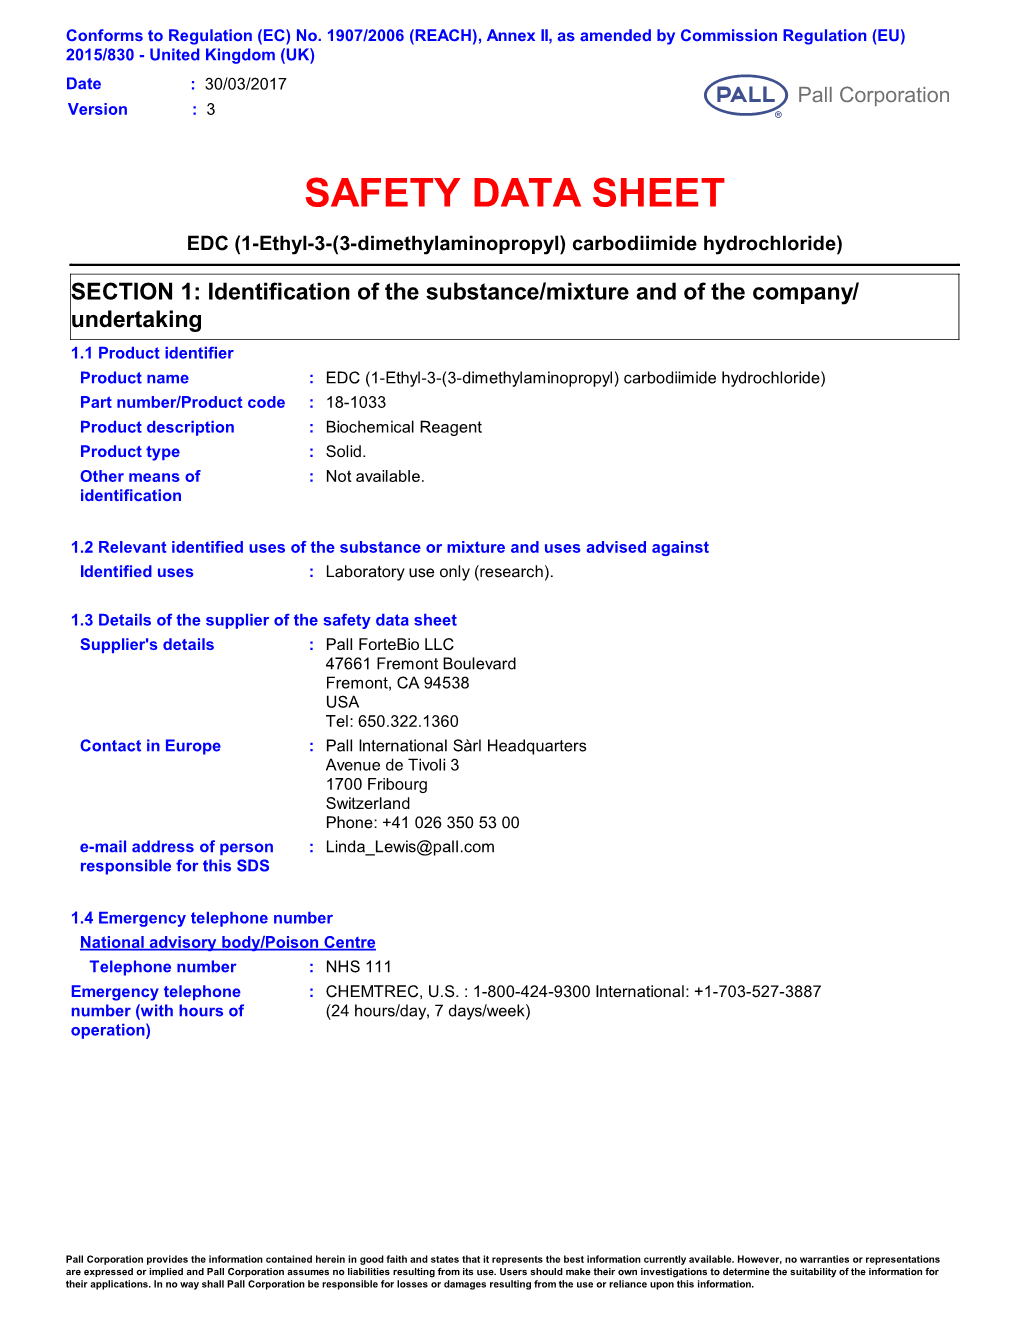 SAFETY DATA SHEET EDC (1-Ethyl-3-(3-Dimethylaminopropyl) Carbodiimide Hydrochloride)